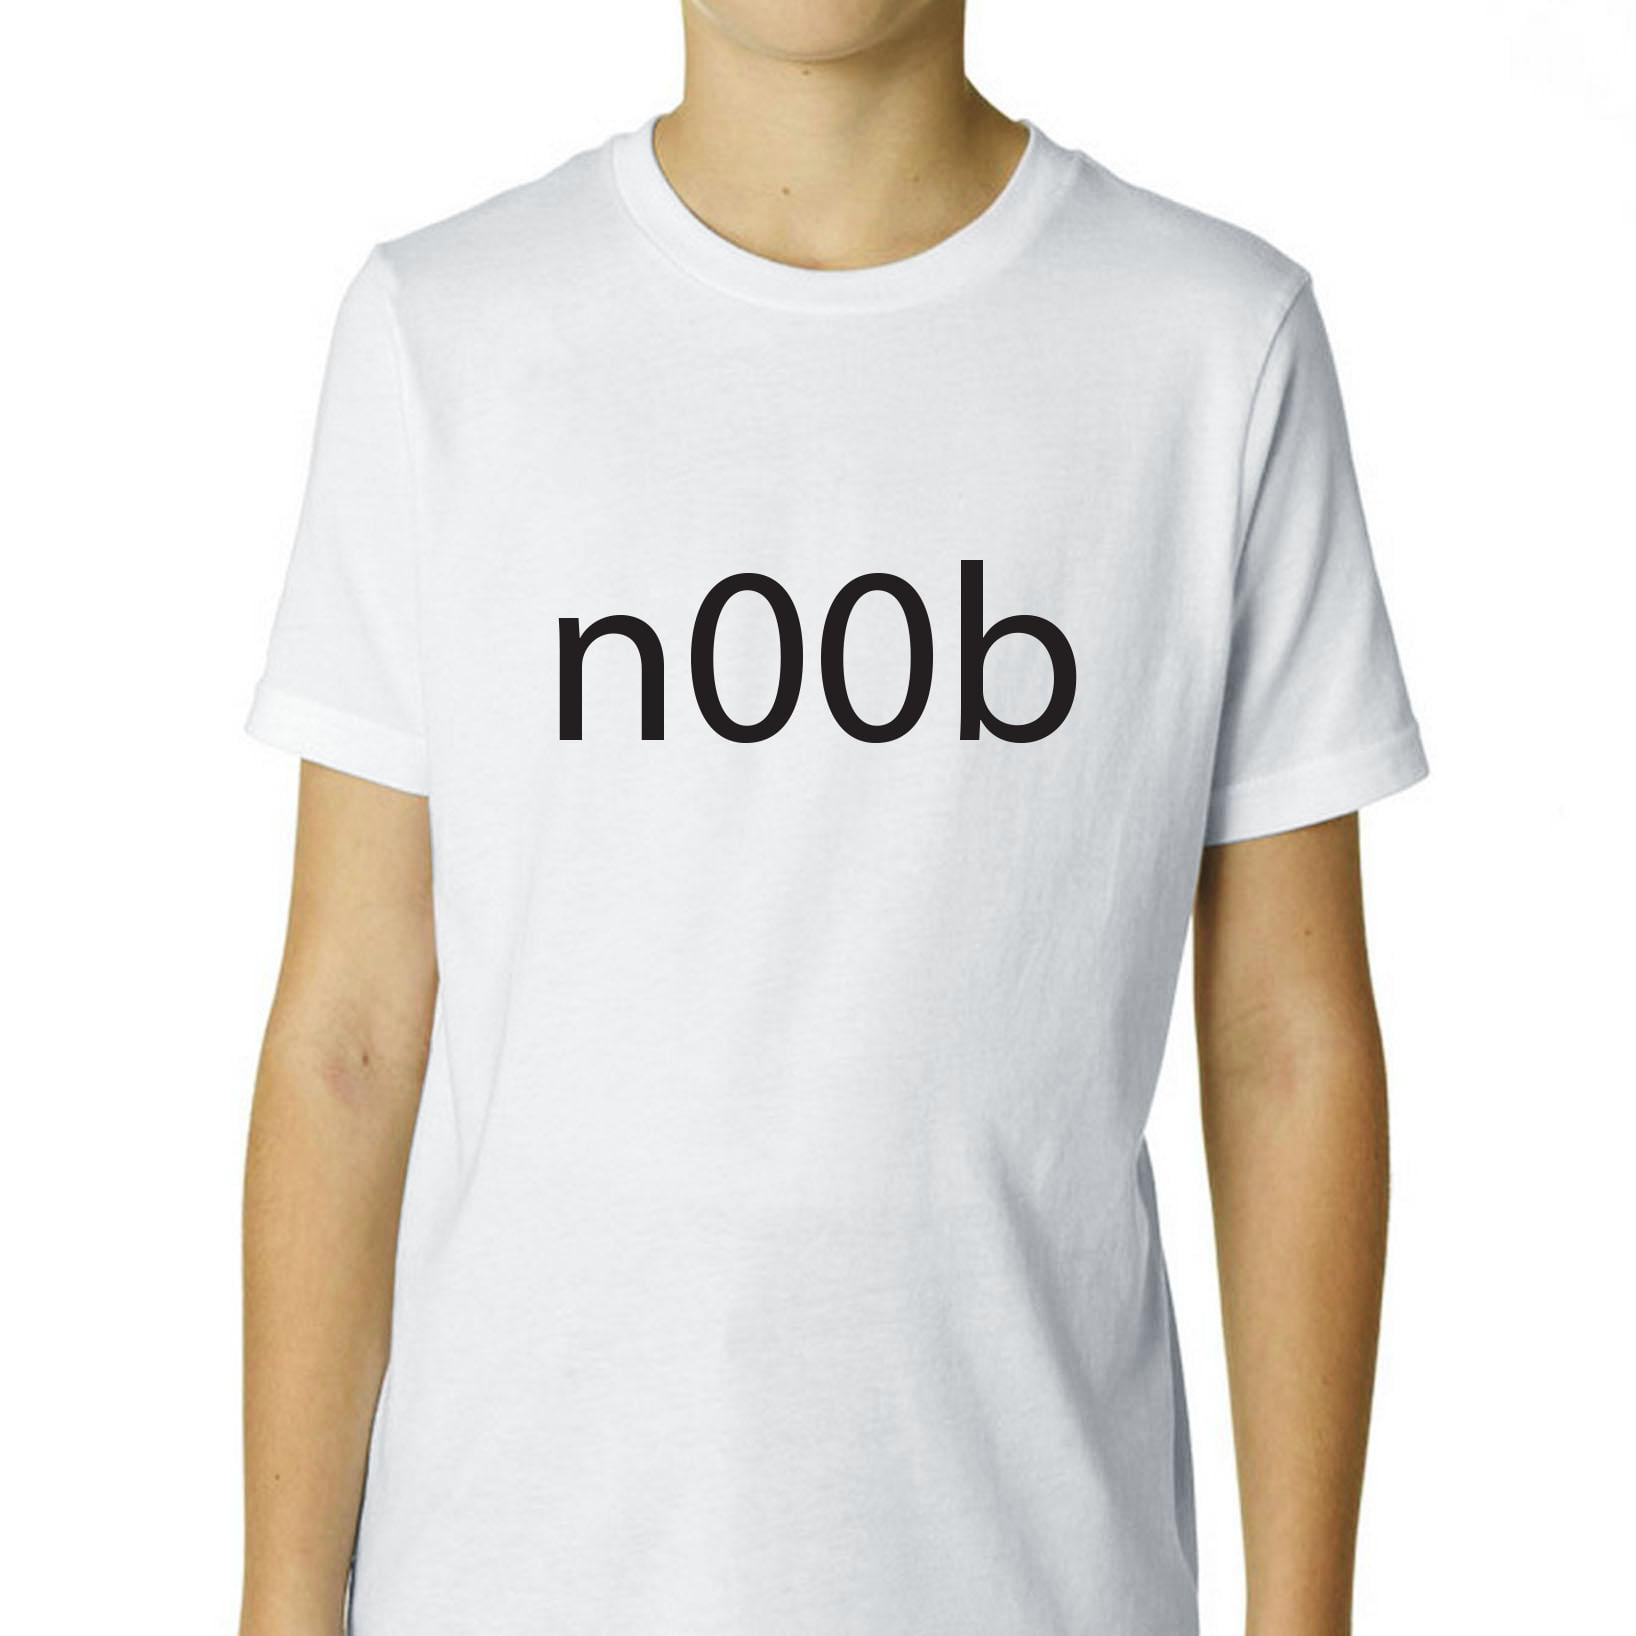 7 Best Bad boy t shirt ideas  free t shirt design, roblox t